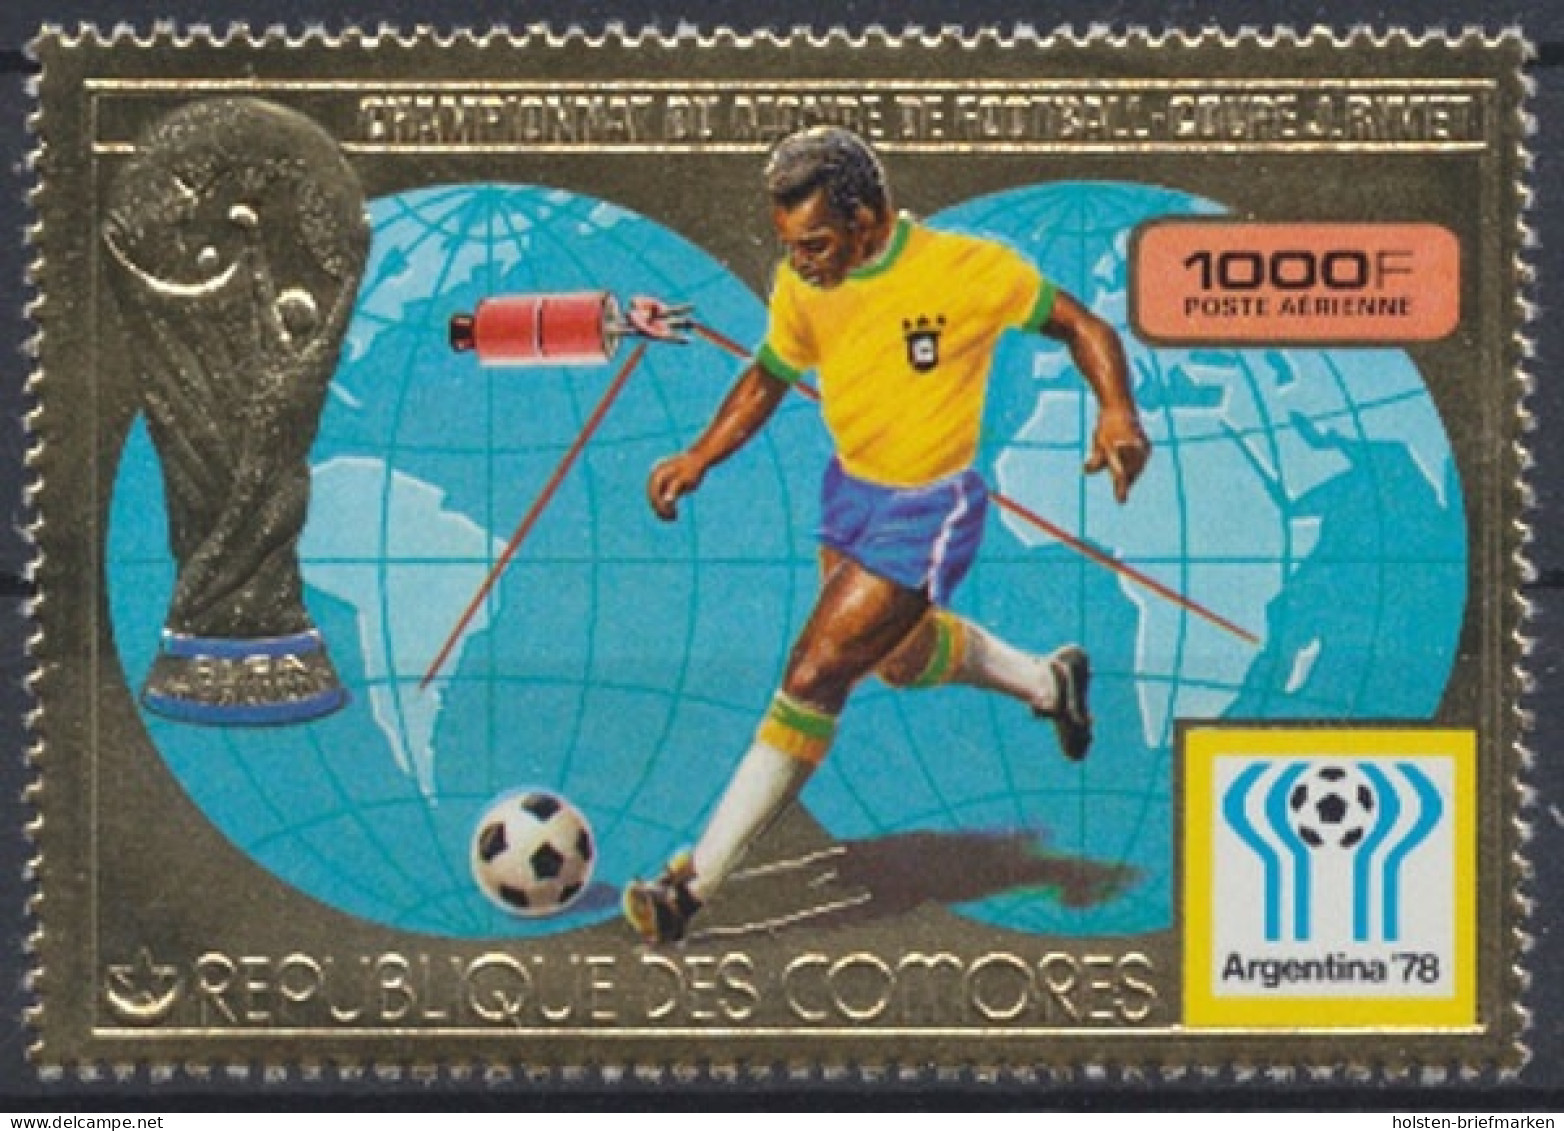 Komoren, Fußball, MiNr. 391 A, Postfrisch - Komoren (1975-...)